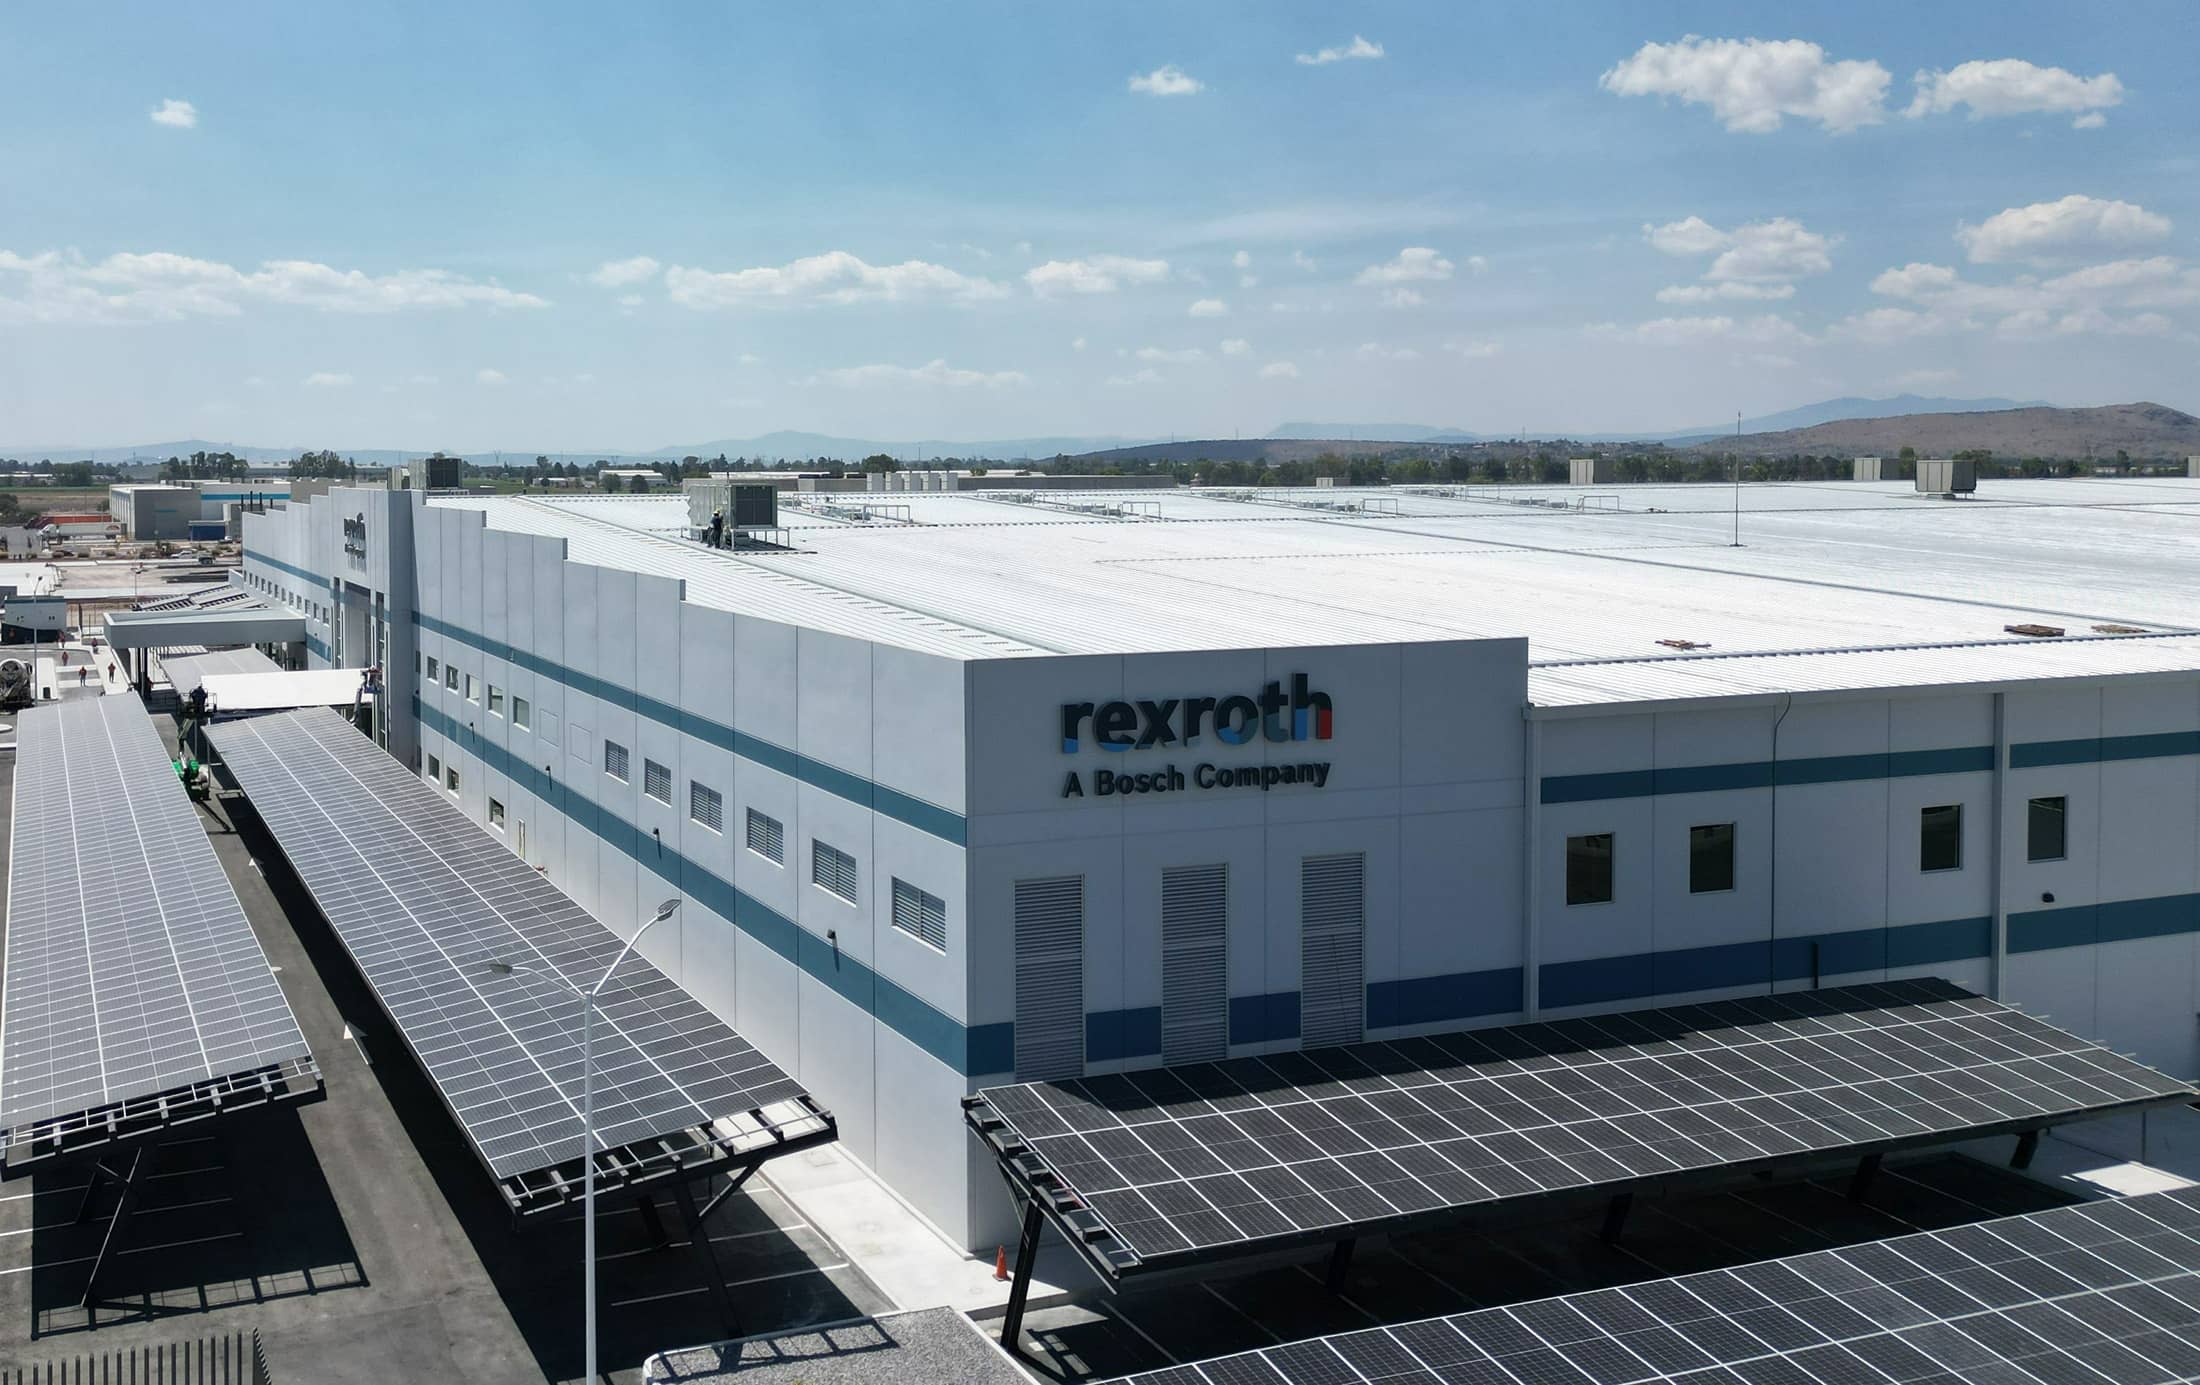 rexroth  A Bosch Company